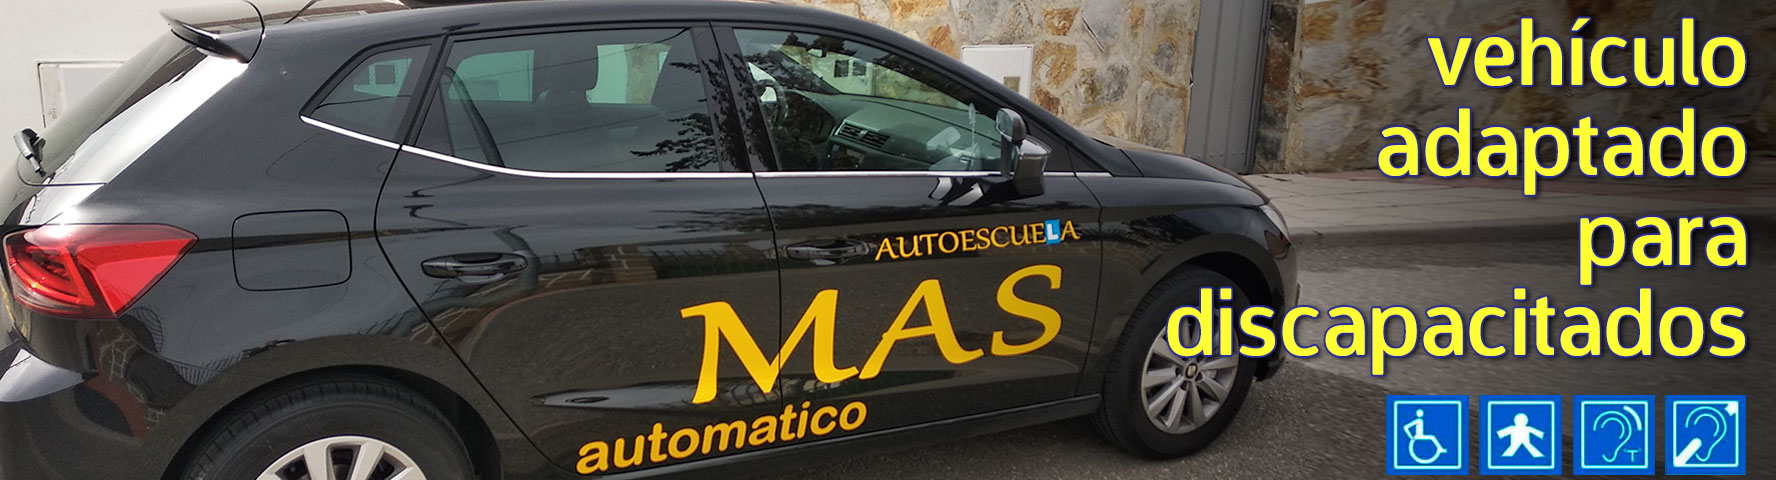 Obtención Permisos de conducir para discapacitados. Autoescuela MAS - Salamanca.